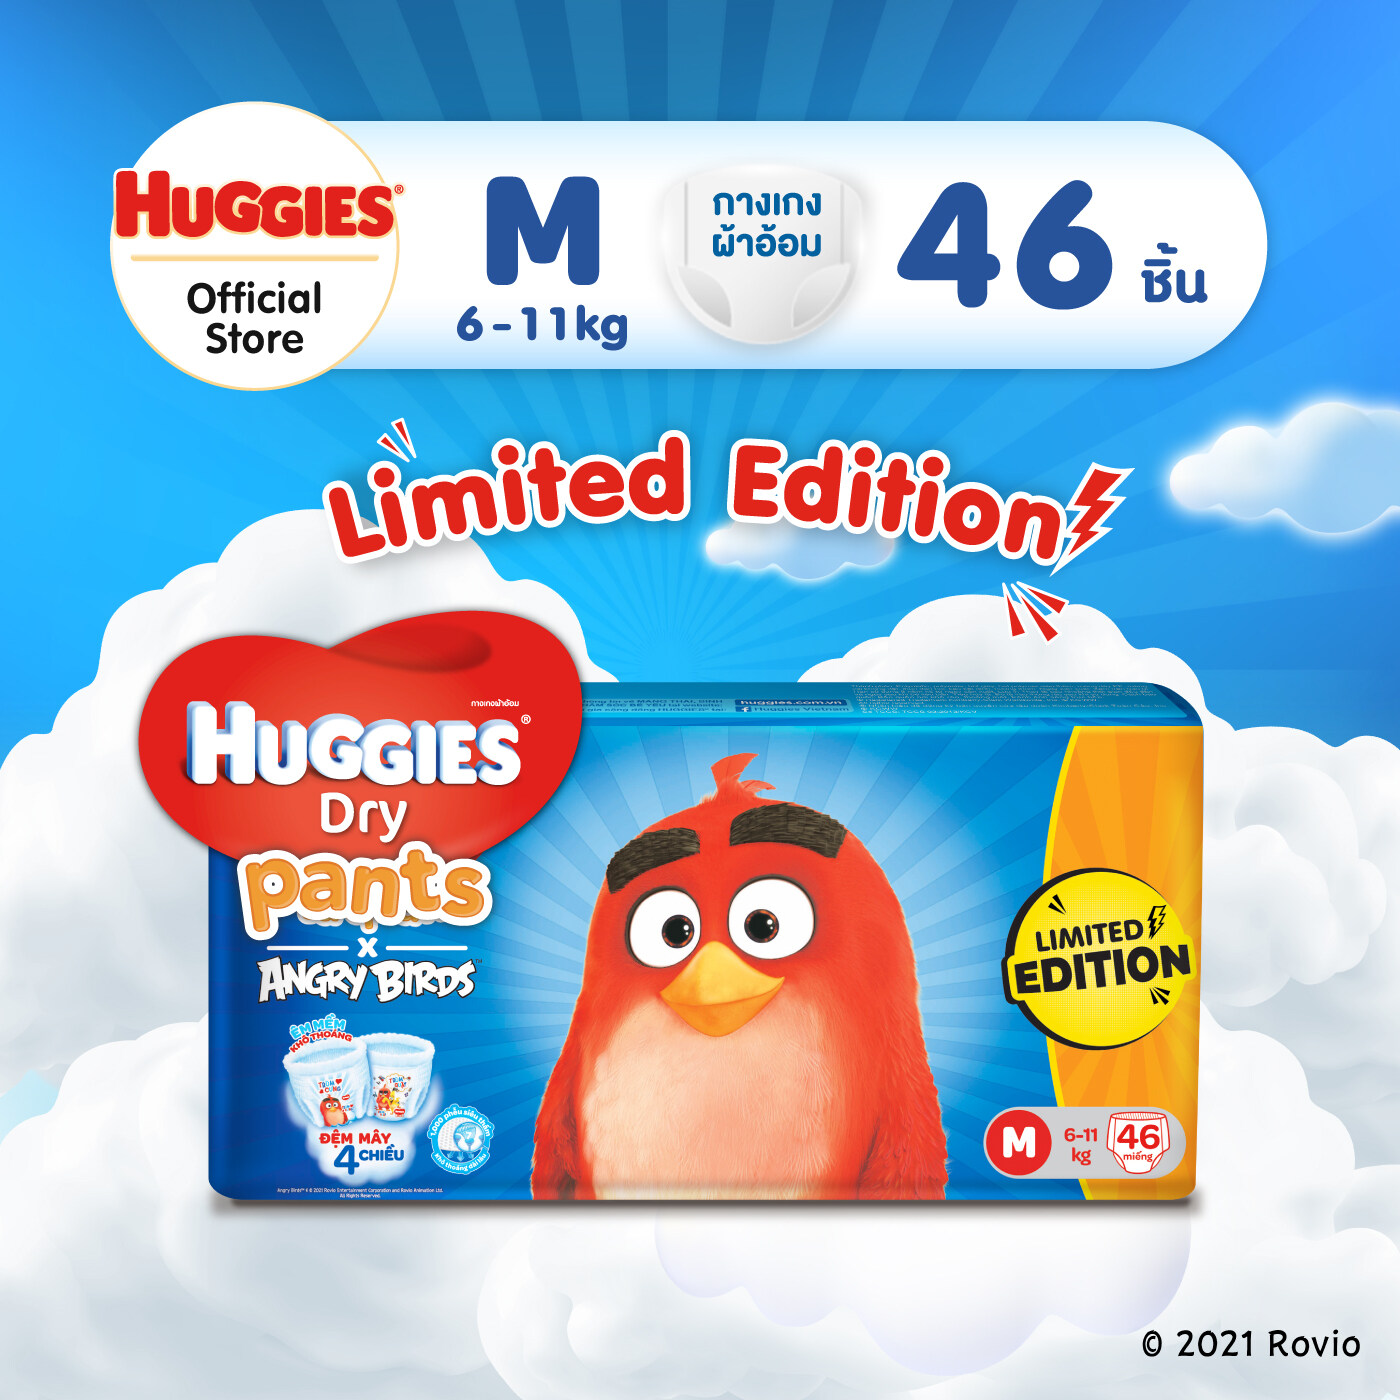 Limited Edition! Huggies Dry Pants Angry Birds [M] กางเกงผ้าอ้อมเด็ก ฮักกี้ส์ ดราย แองกรี้ เบิร์ด ไซส์ M 46 ชิ้น (แพ็คพิเศษจำนวนจำกัด)